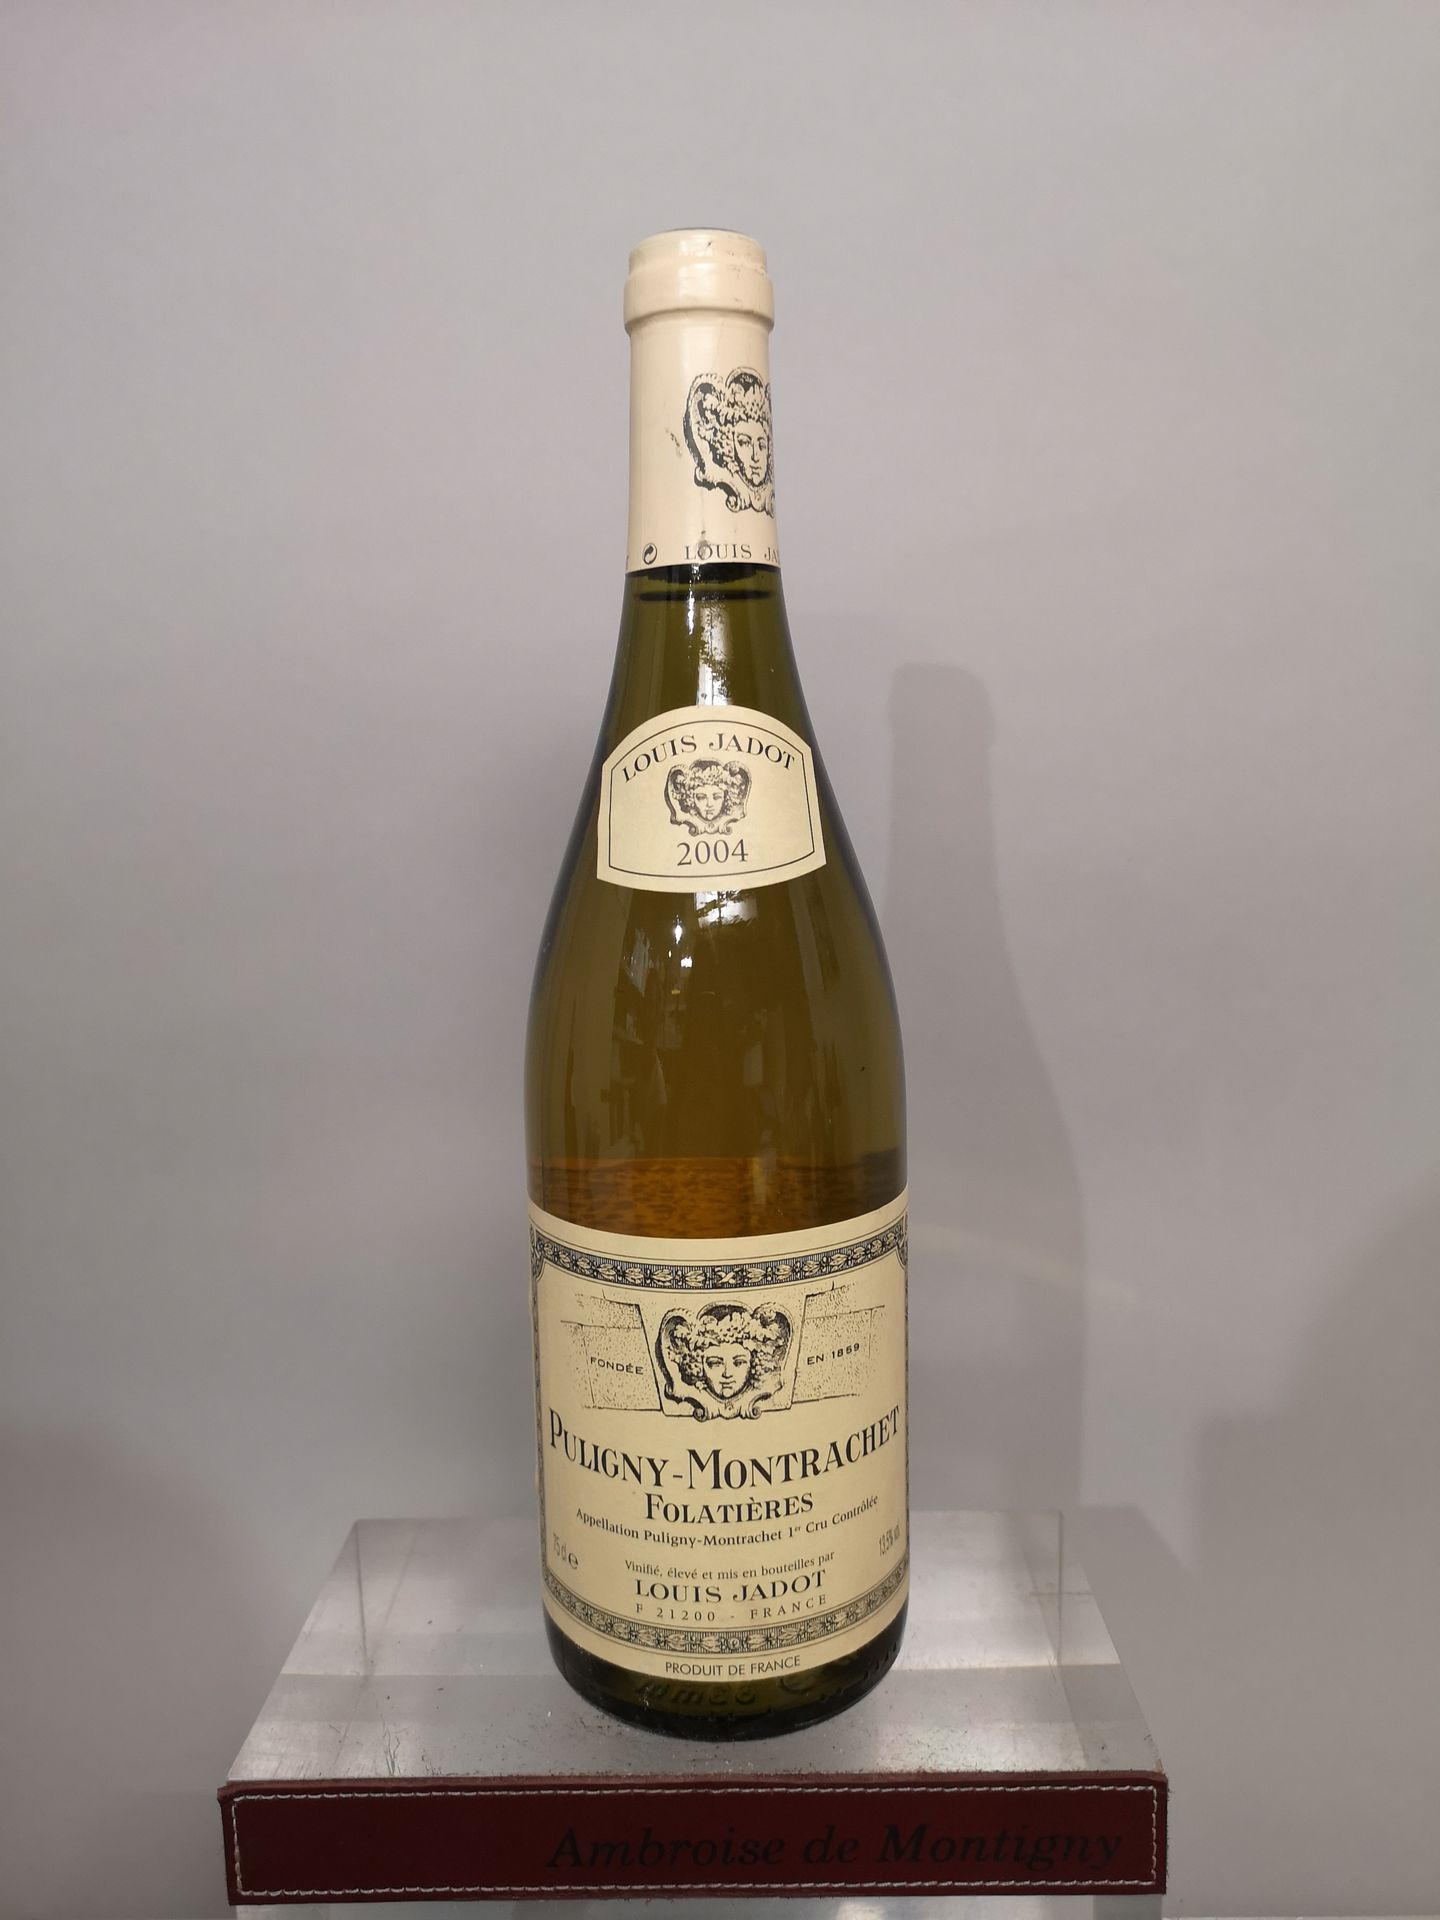 Null 1 bottiglia PULIGNY MONTRACHET 1er cru "Folatières" - L. JADOT 2004